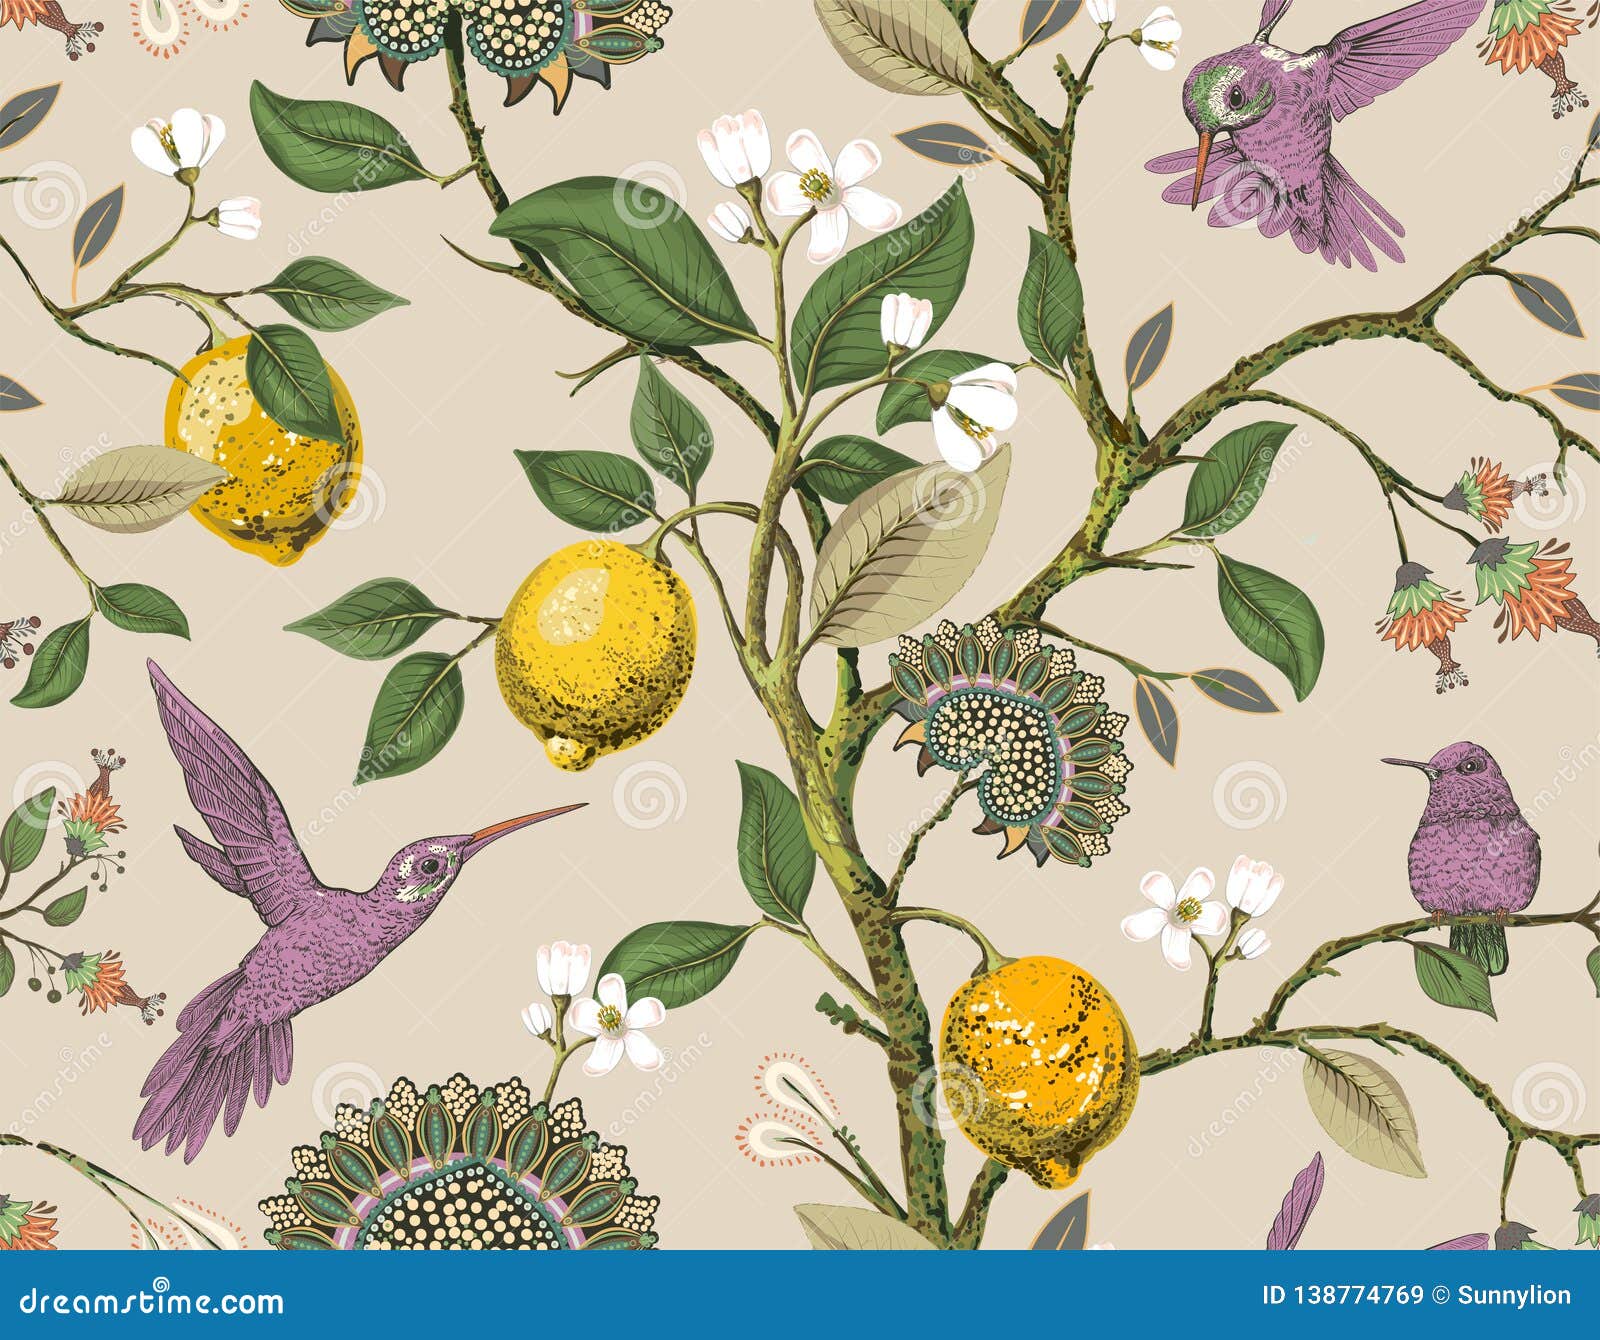 Floral Vector Seamless Pattern. Botanical Wallpaper. Plants, Birds